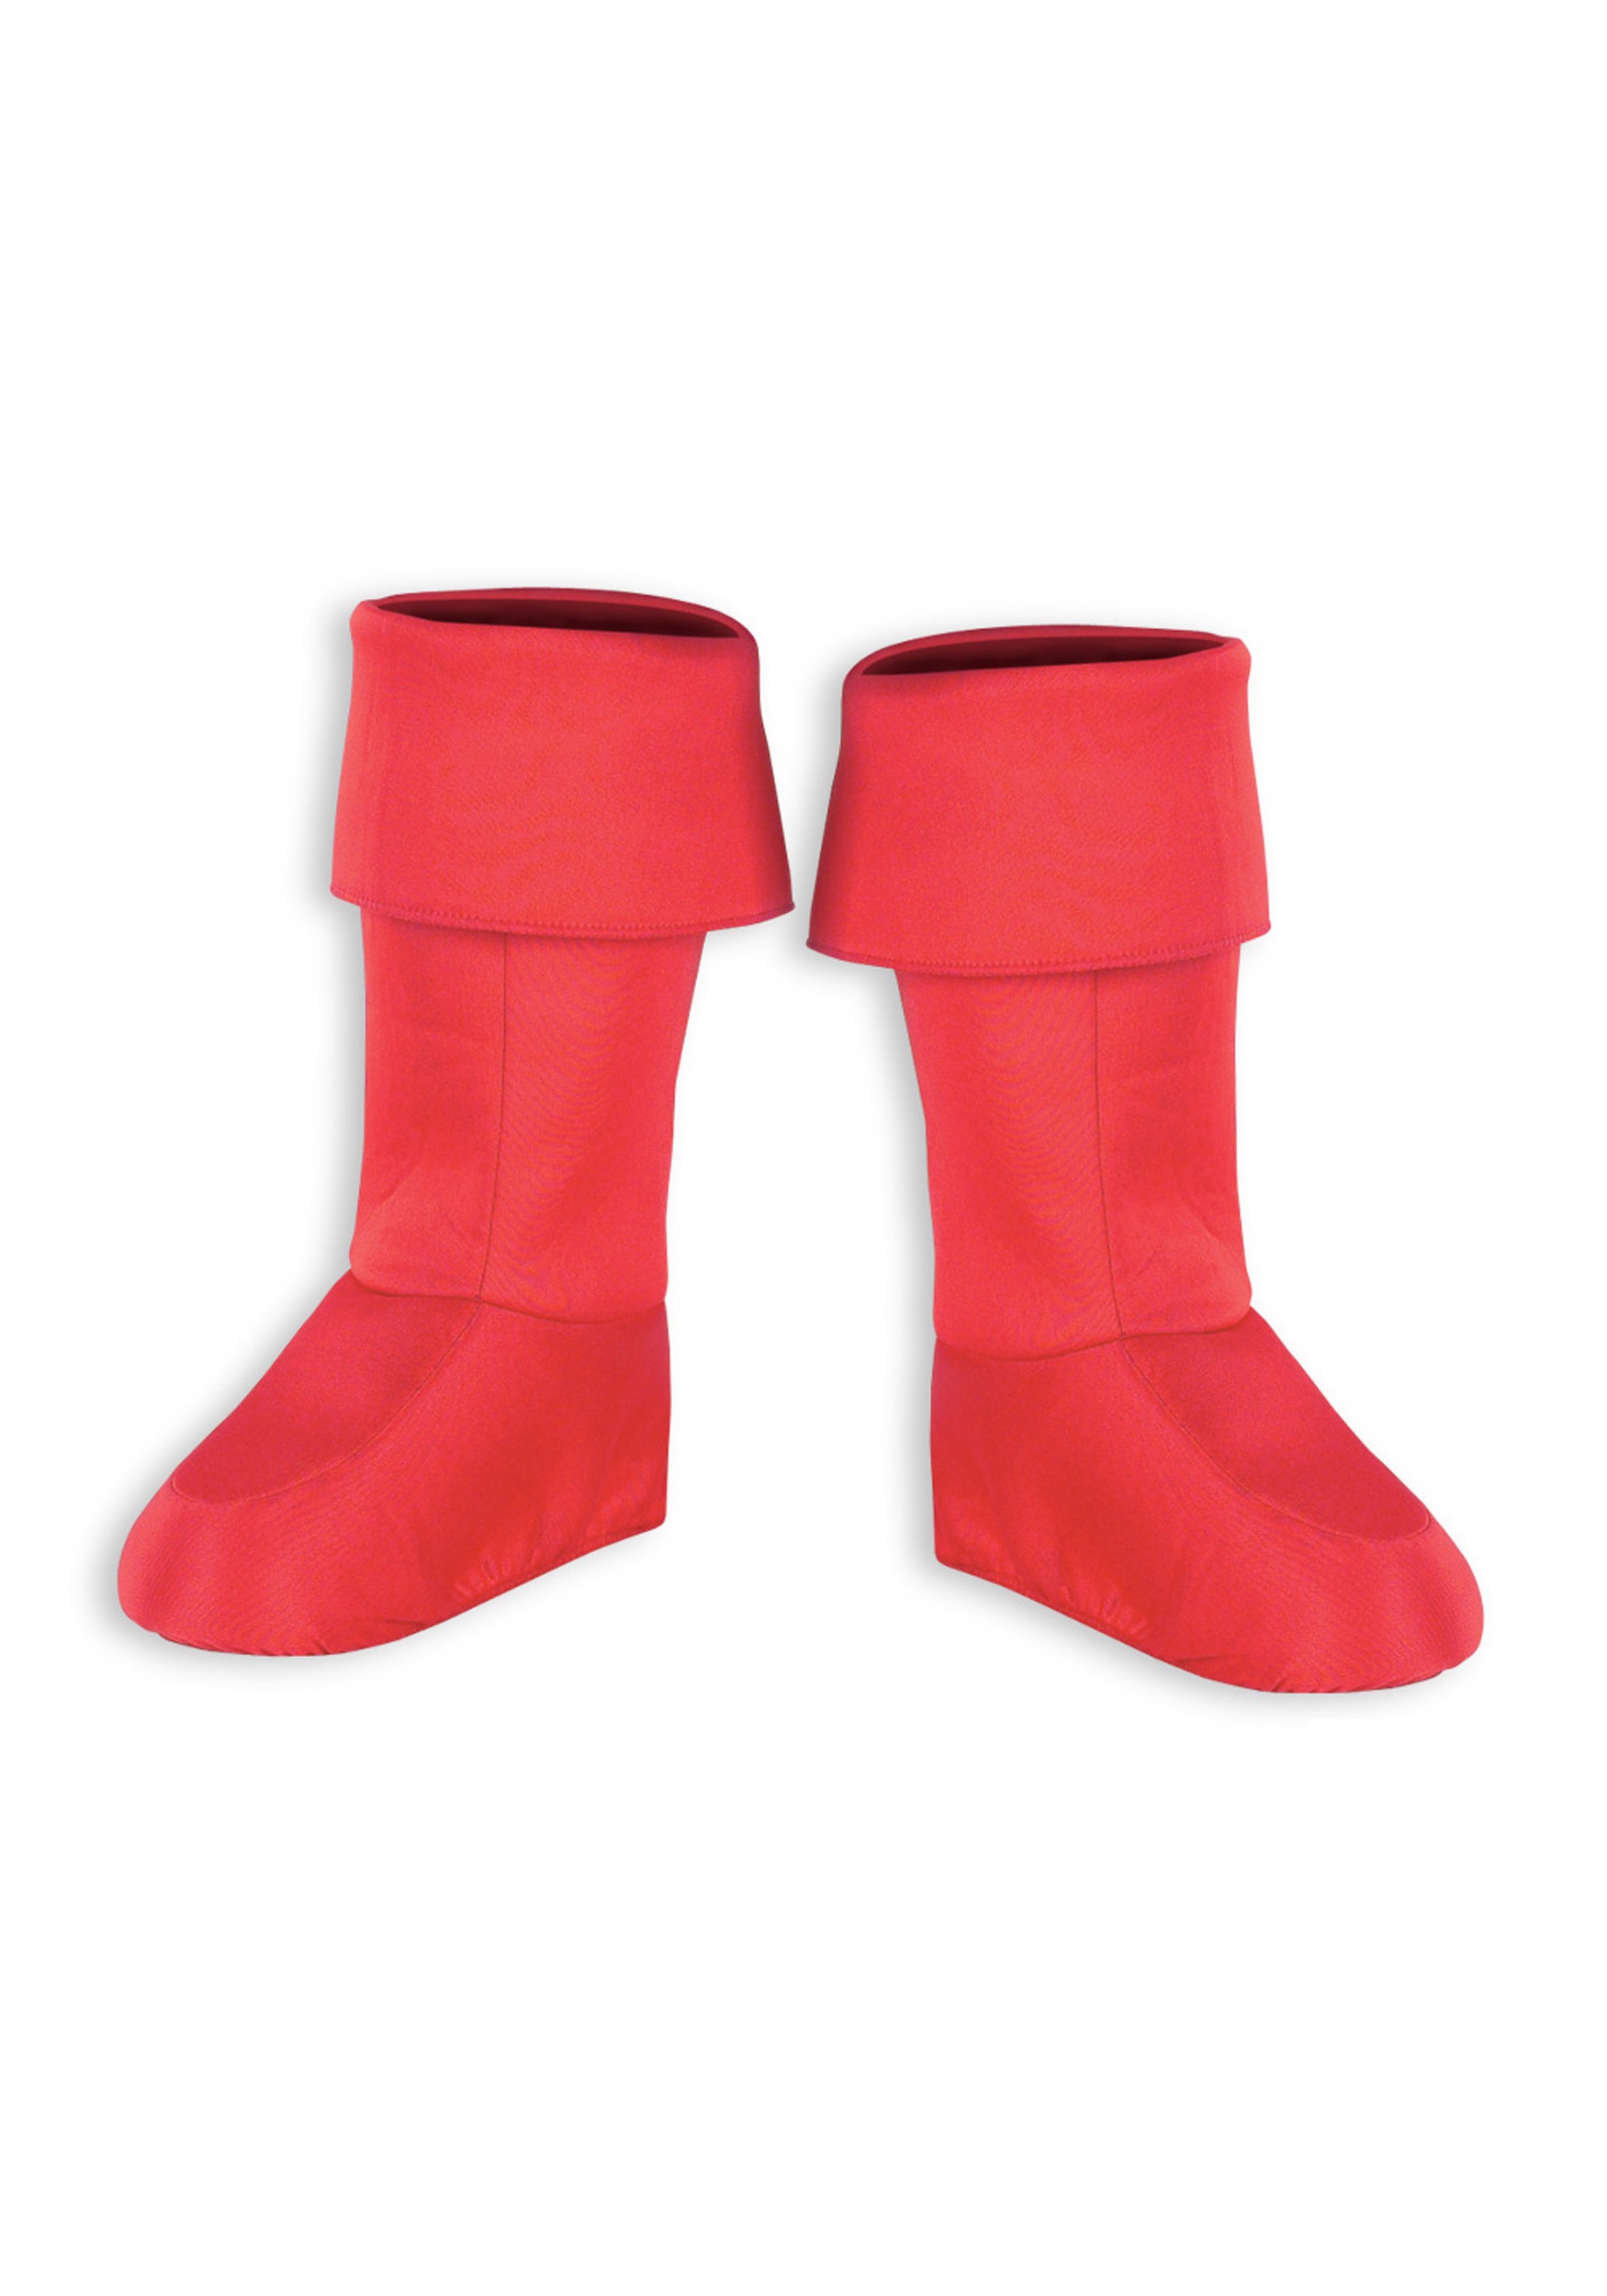 Kids Red Superhero Boot Covers - Halloween Costume Ideas 2023